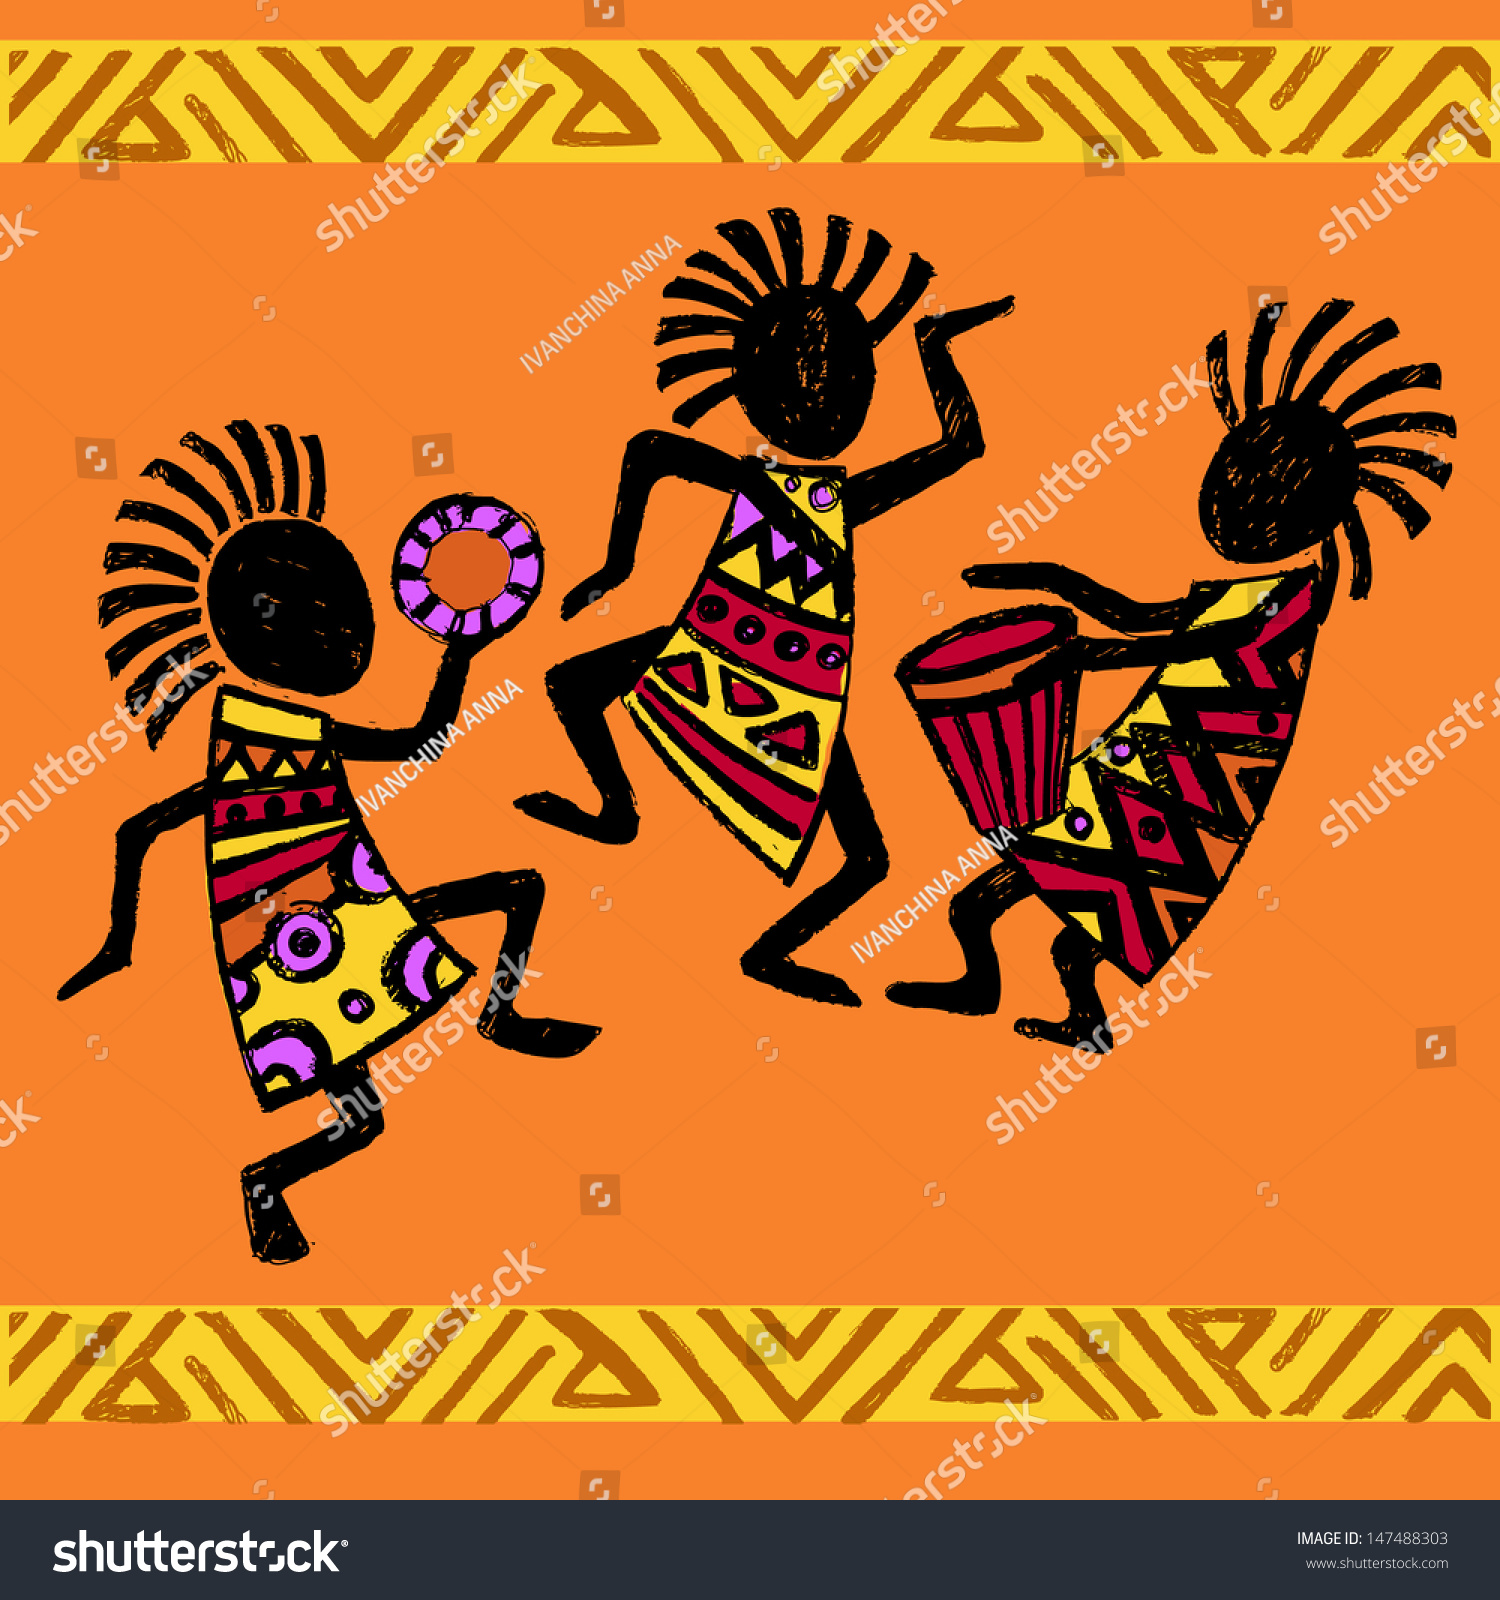 Танец аборигенов для детей